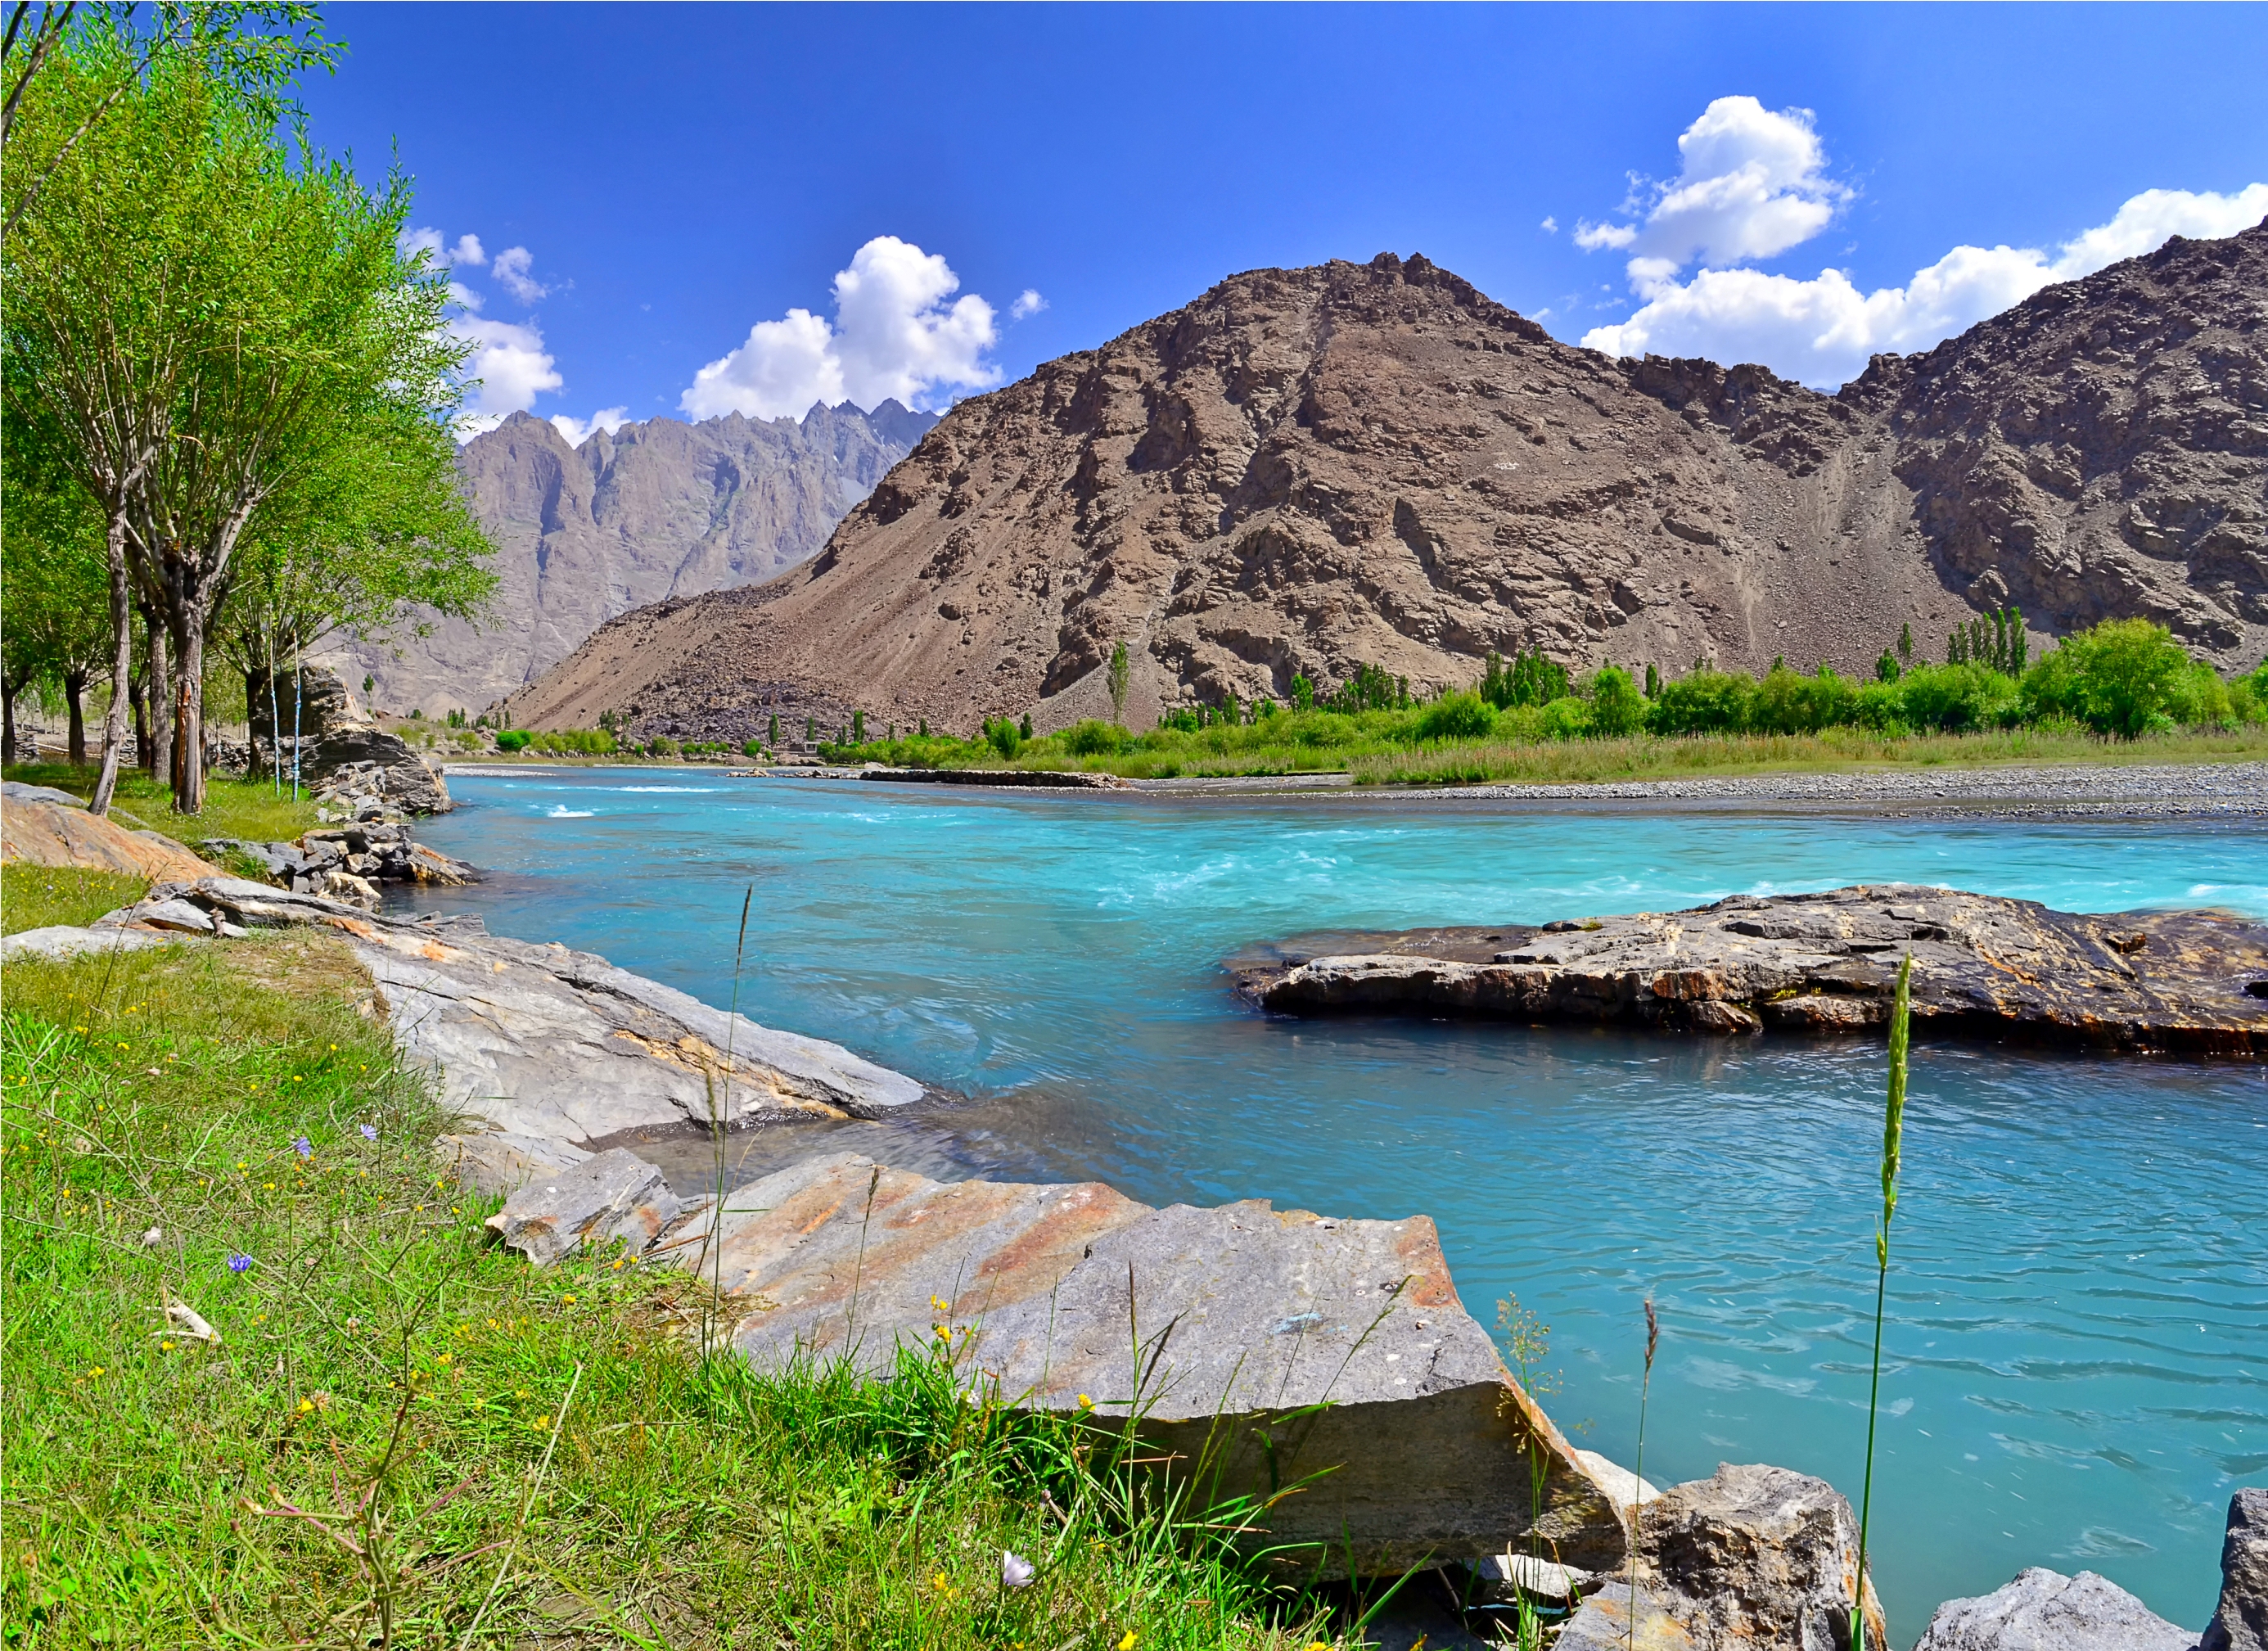 File:Soog Valley, Skardu, Gilgit Baltistan.jpg - Wikimedia Commons